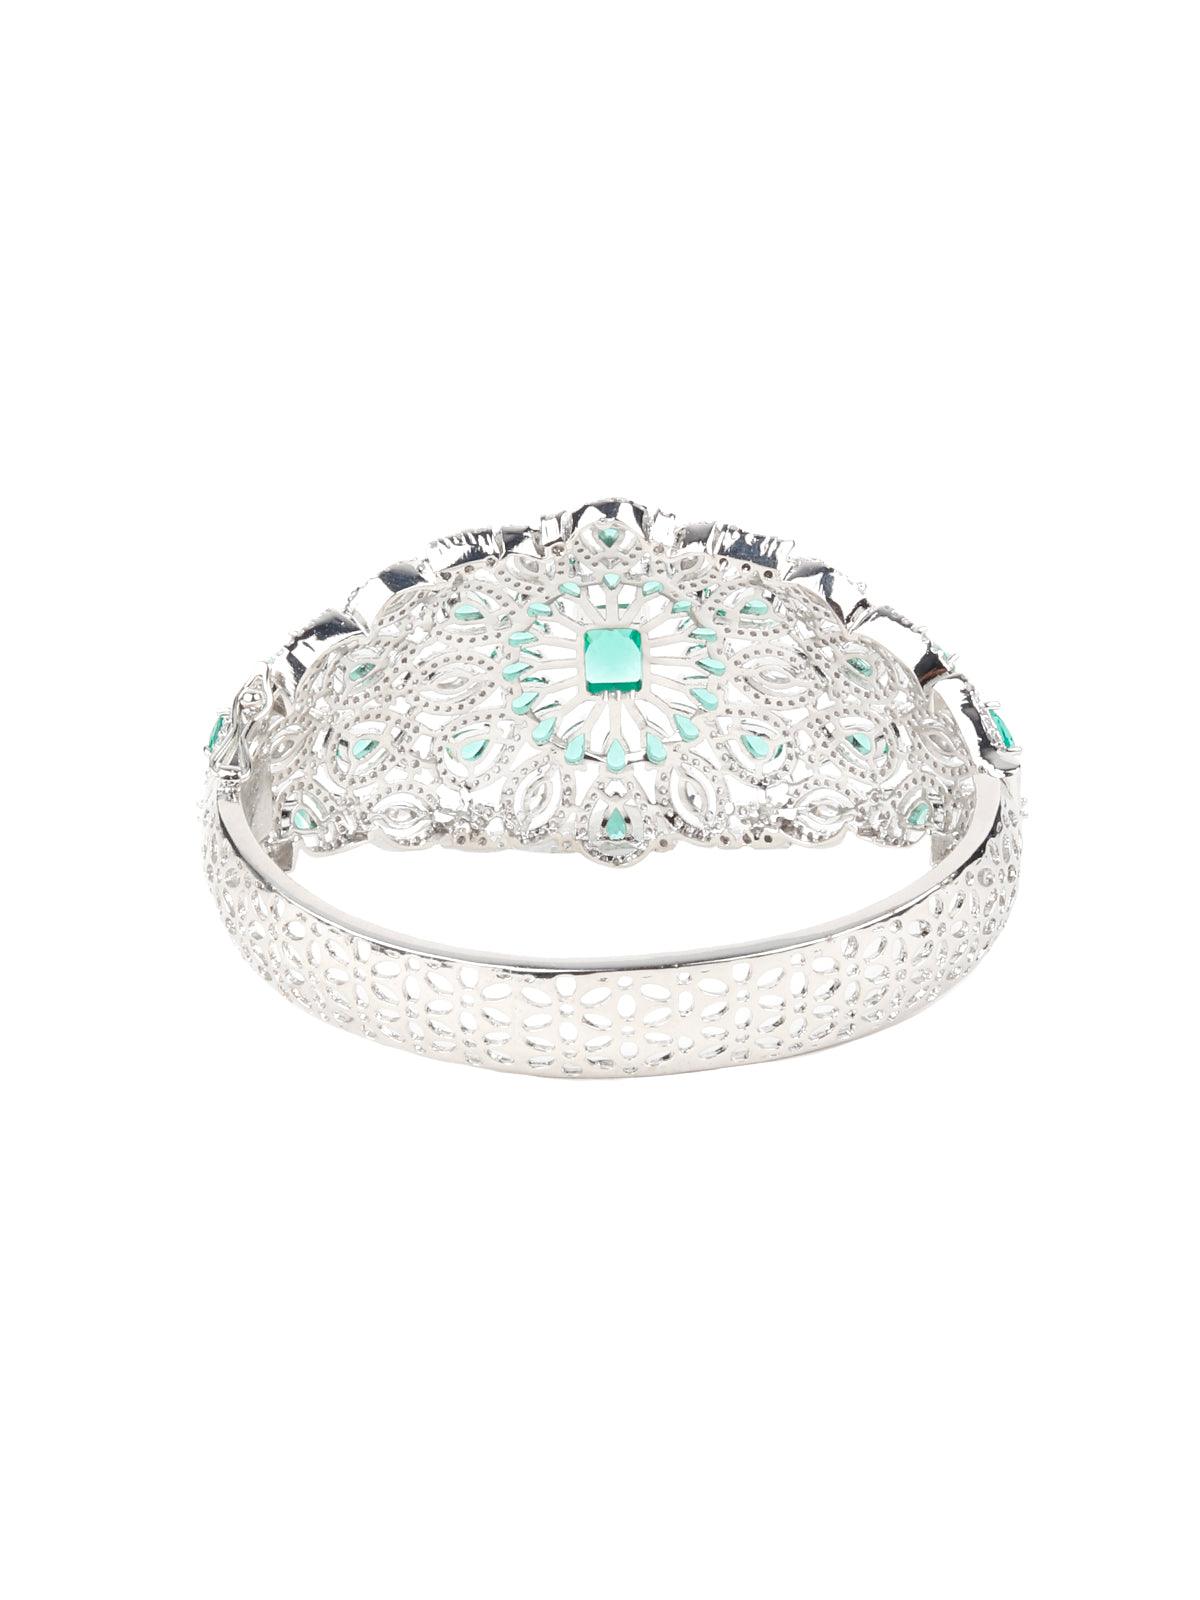 Royal Silver Crystal Studded Bracelet - Odette